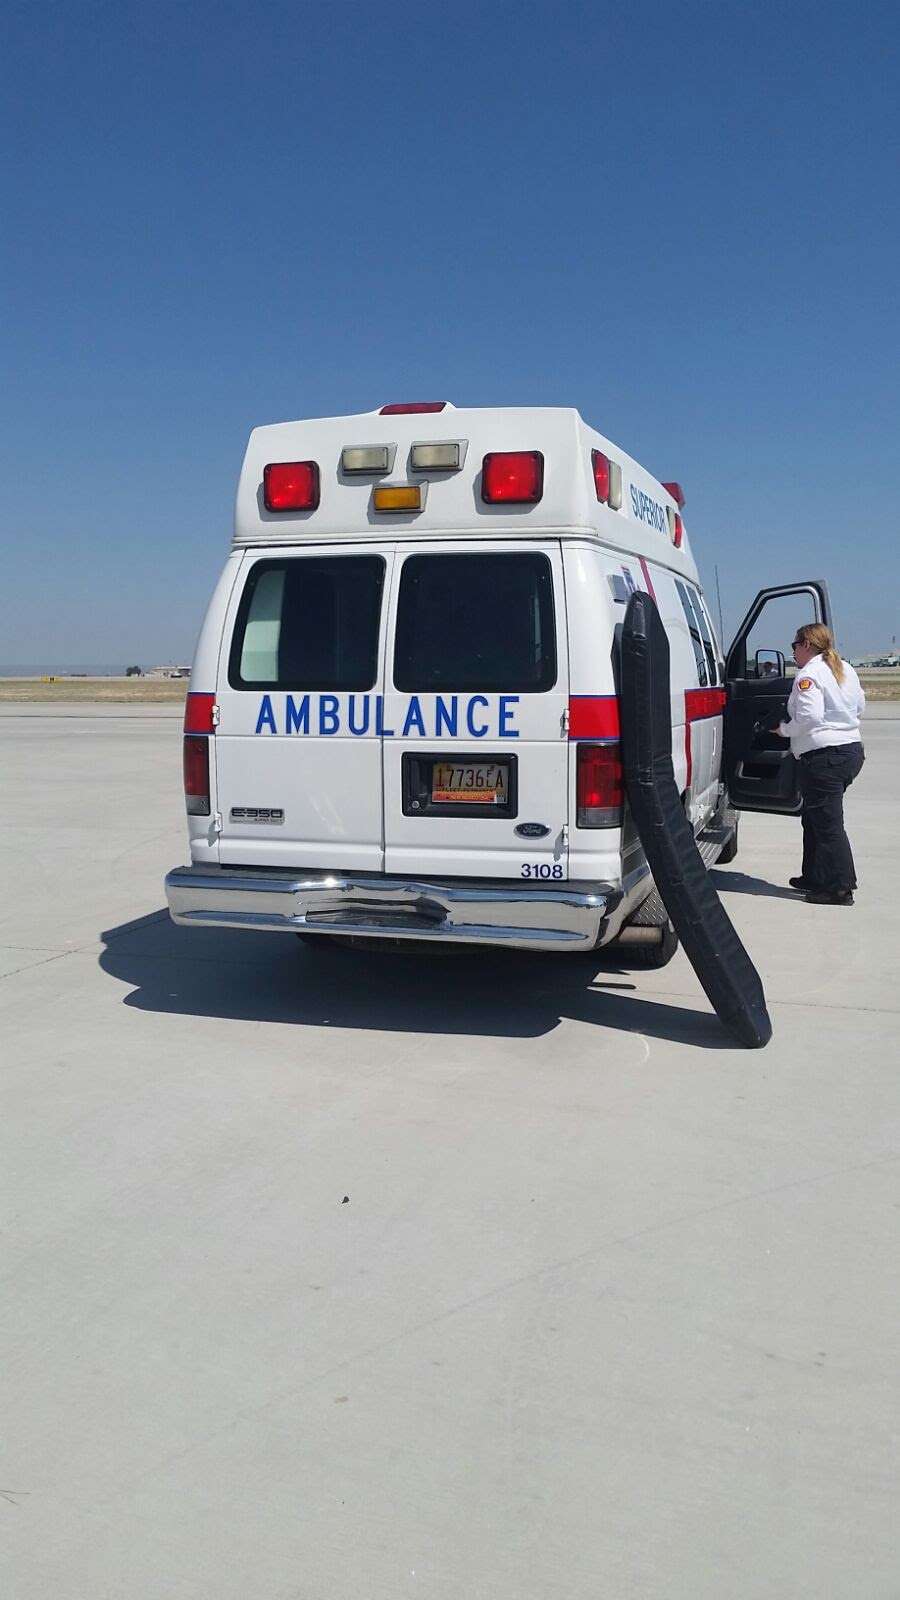 Angel MedFlight Worldwide Air Ambulance Services | 17851 N 85th St #350, Scottsdale, AZ 85255 | Phone: (877) 264-3570